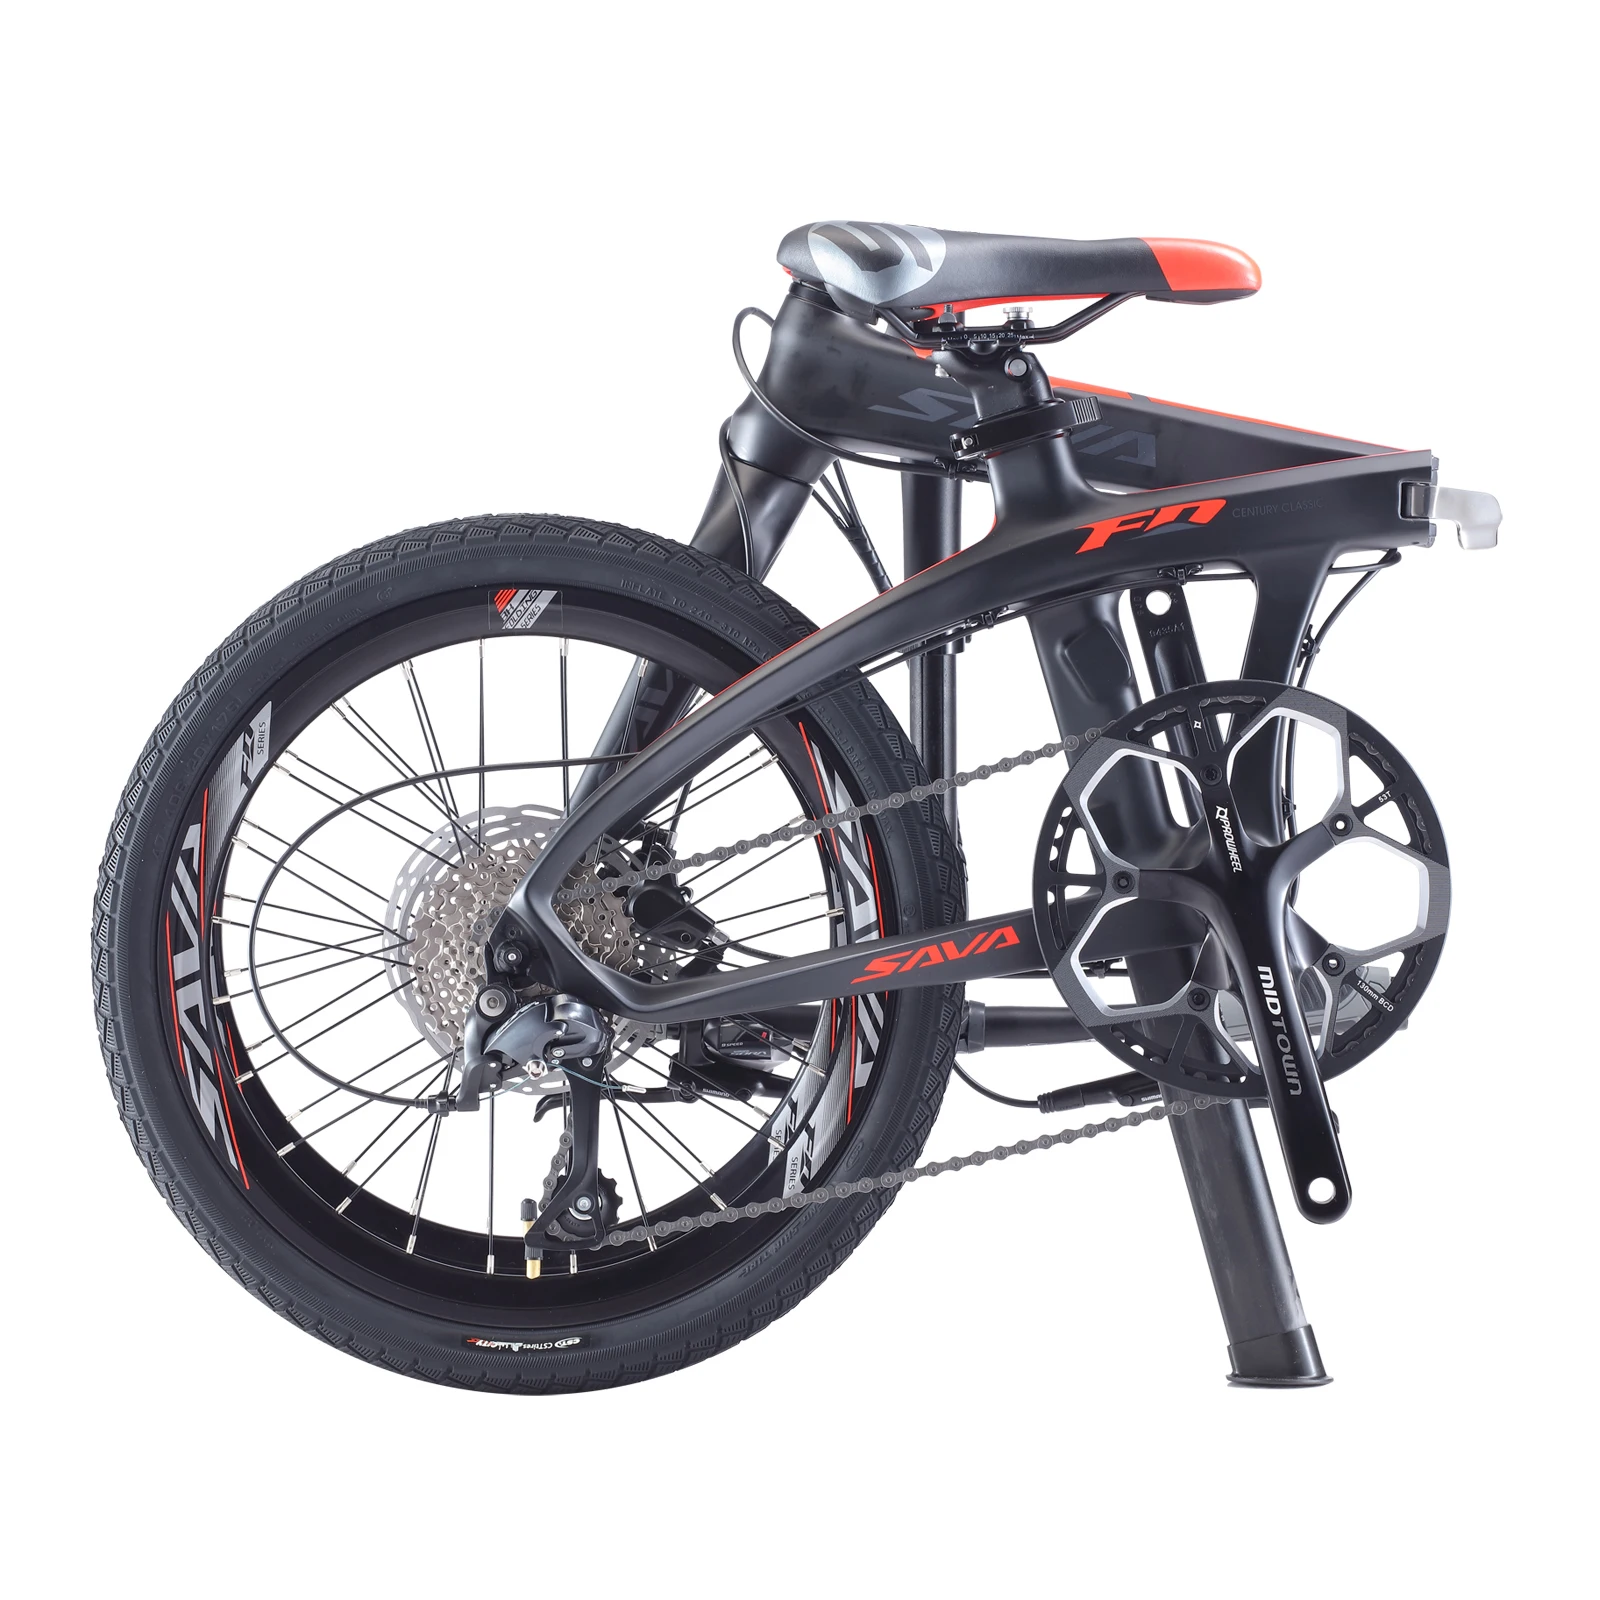 

SAVA Factory High Quality Mini Compact City Tour Bike Carbon Fiber folding bike 20 inch Ultralight 9 Speed bicycle, Black red/black blue/black orange